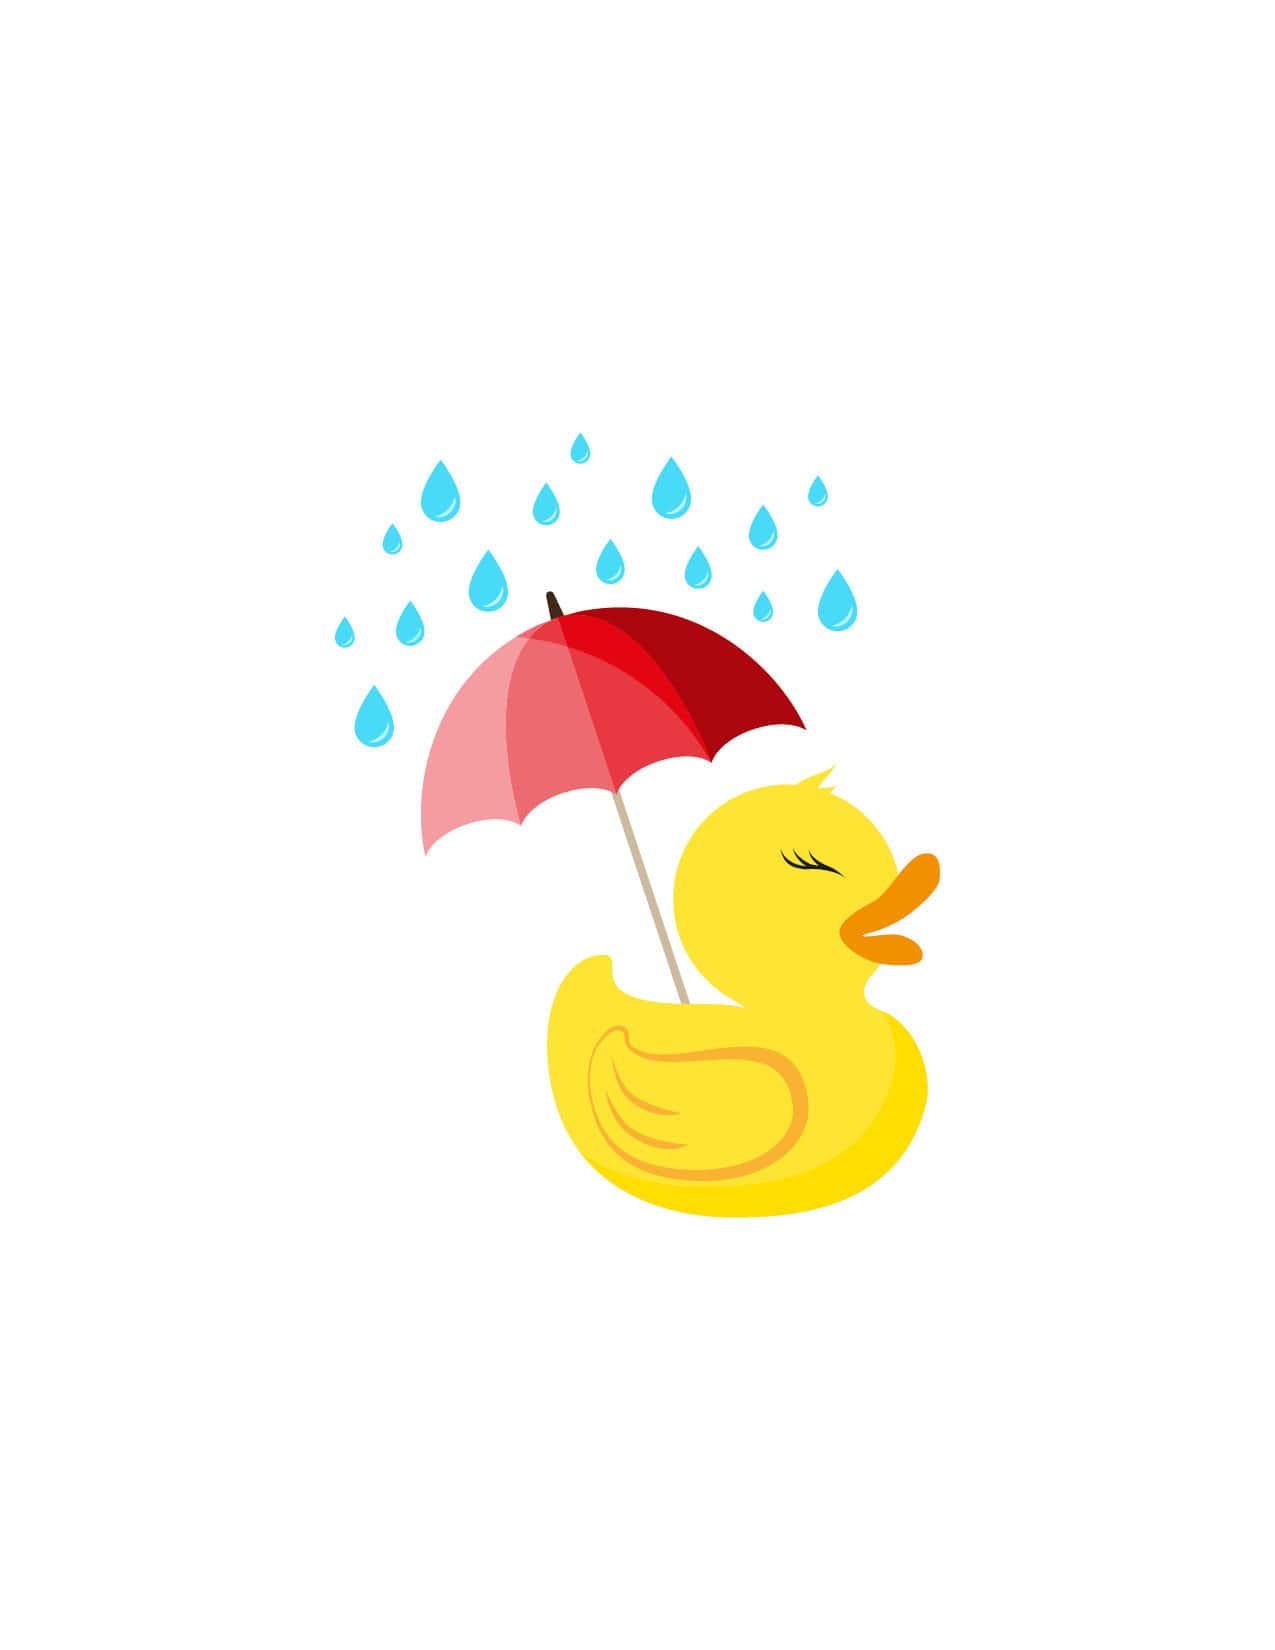 Animated yellow duck with rain and umbrella